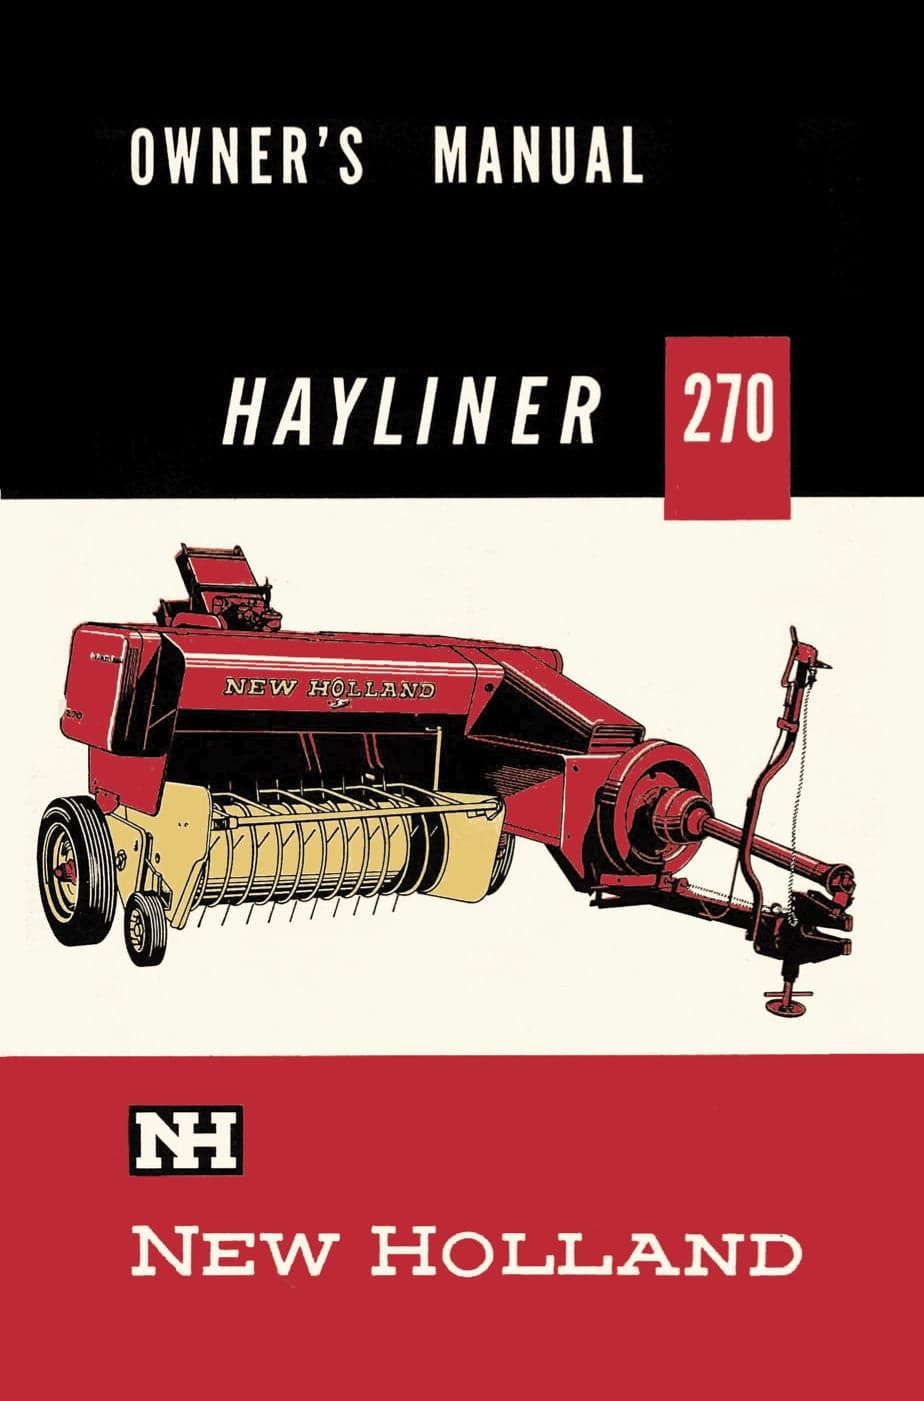 New Holland Hayliner 270 Baler - Owner's Manual - Ag Manuals - A Provider of Digital Farm Manuals - 1